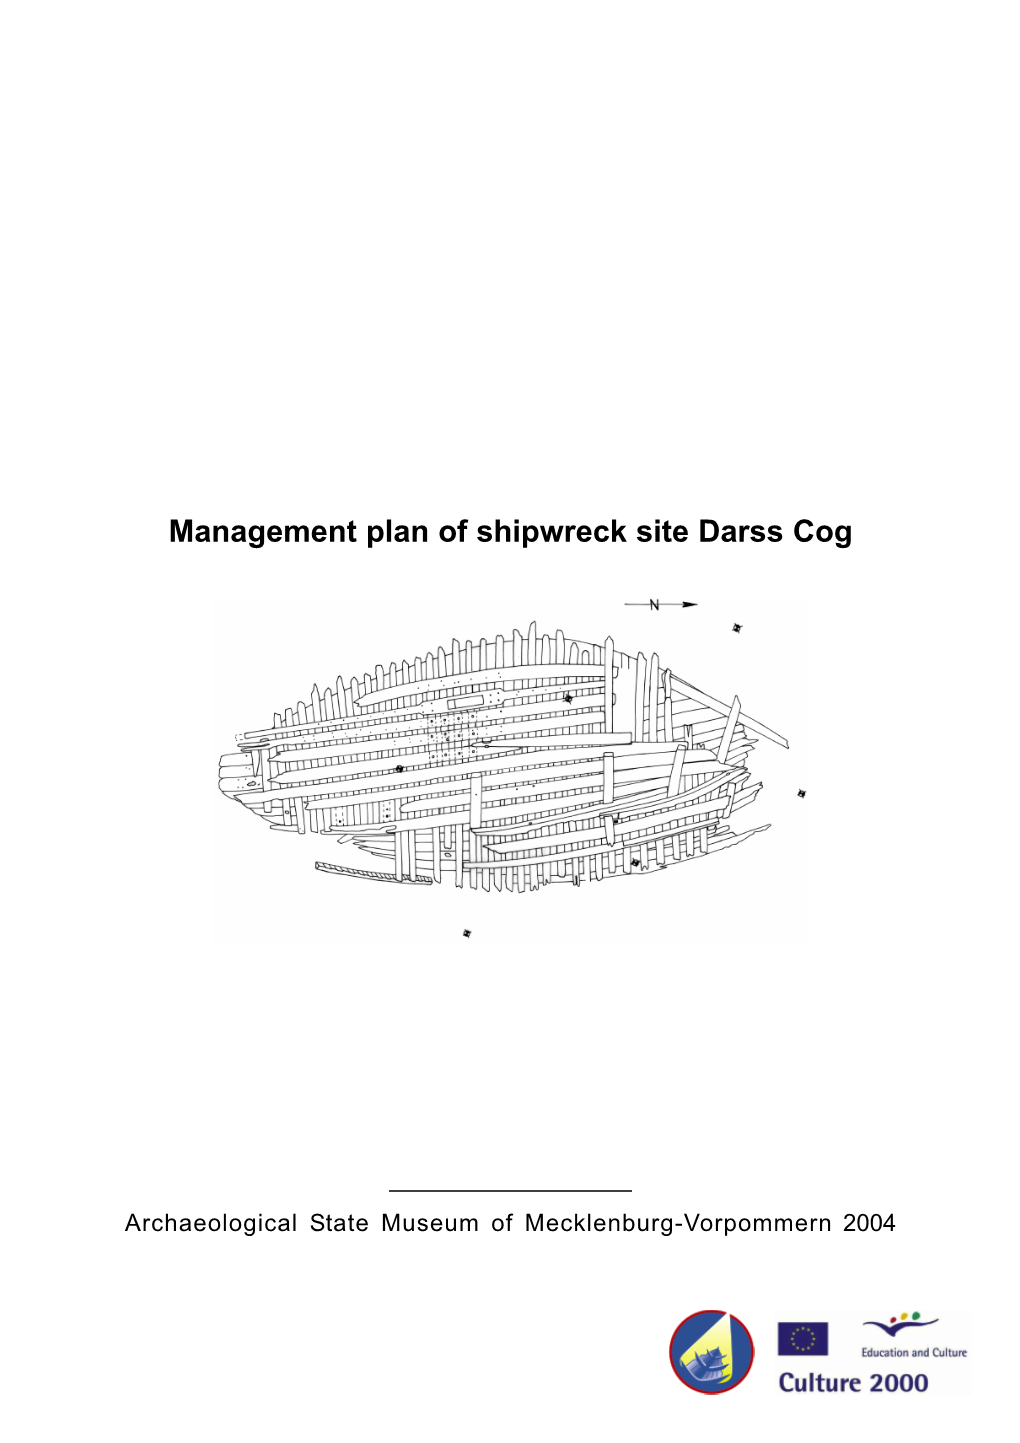 Management Plan of Shipwreck Site Darss Cog